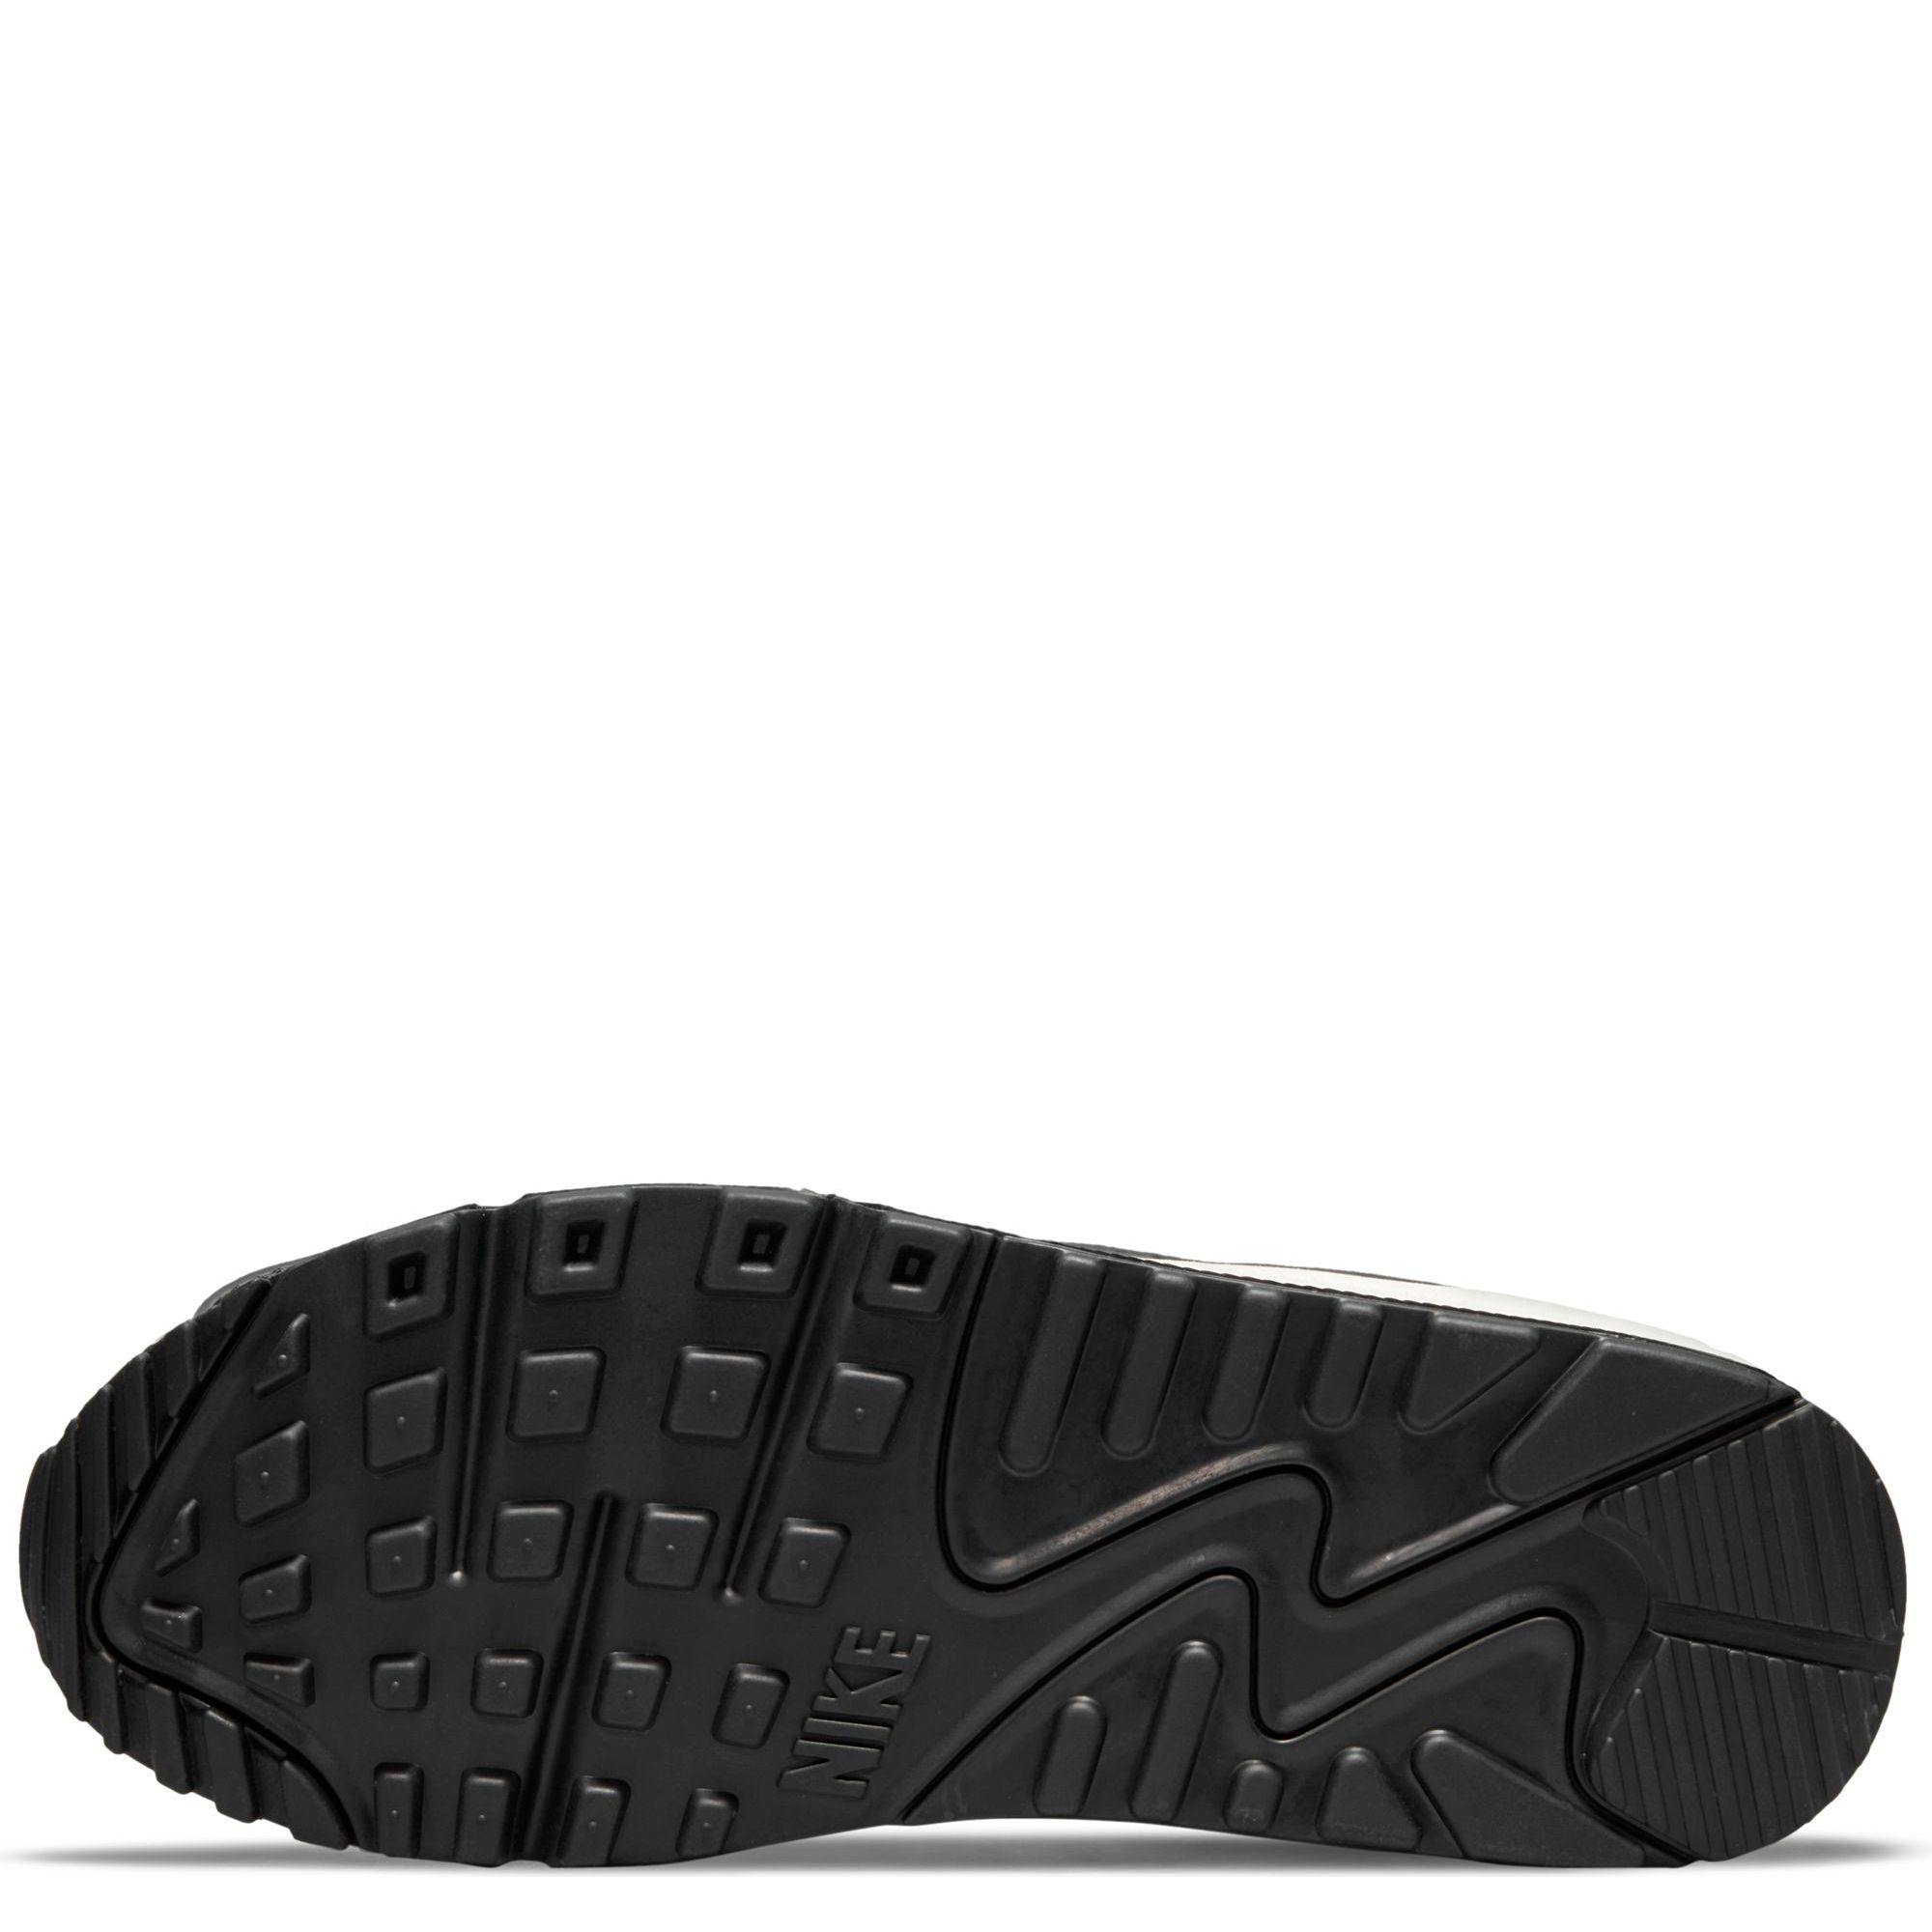 Nike Air Max 1 Leather Black White Dark Grey 654466-001 - Purchaze